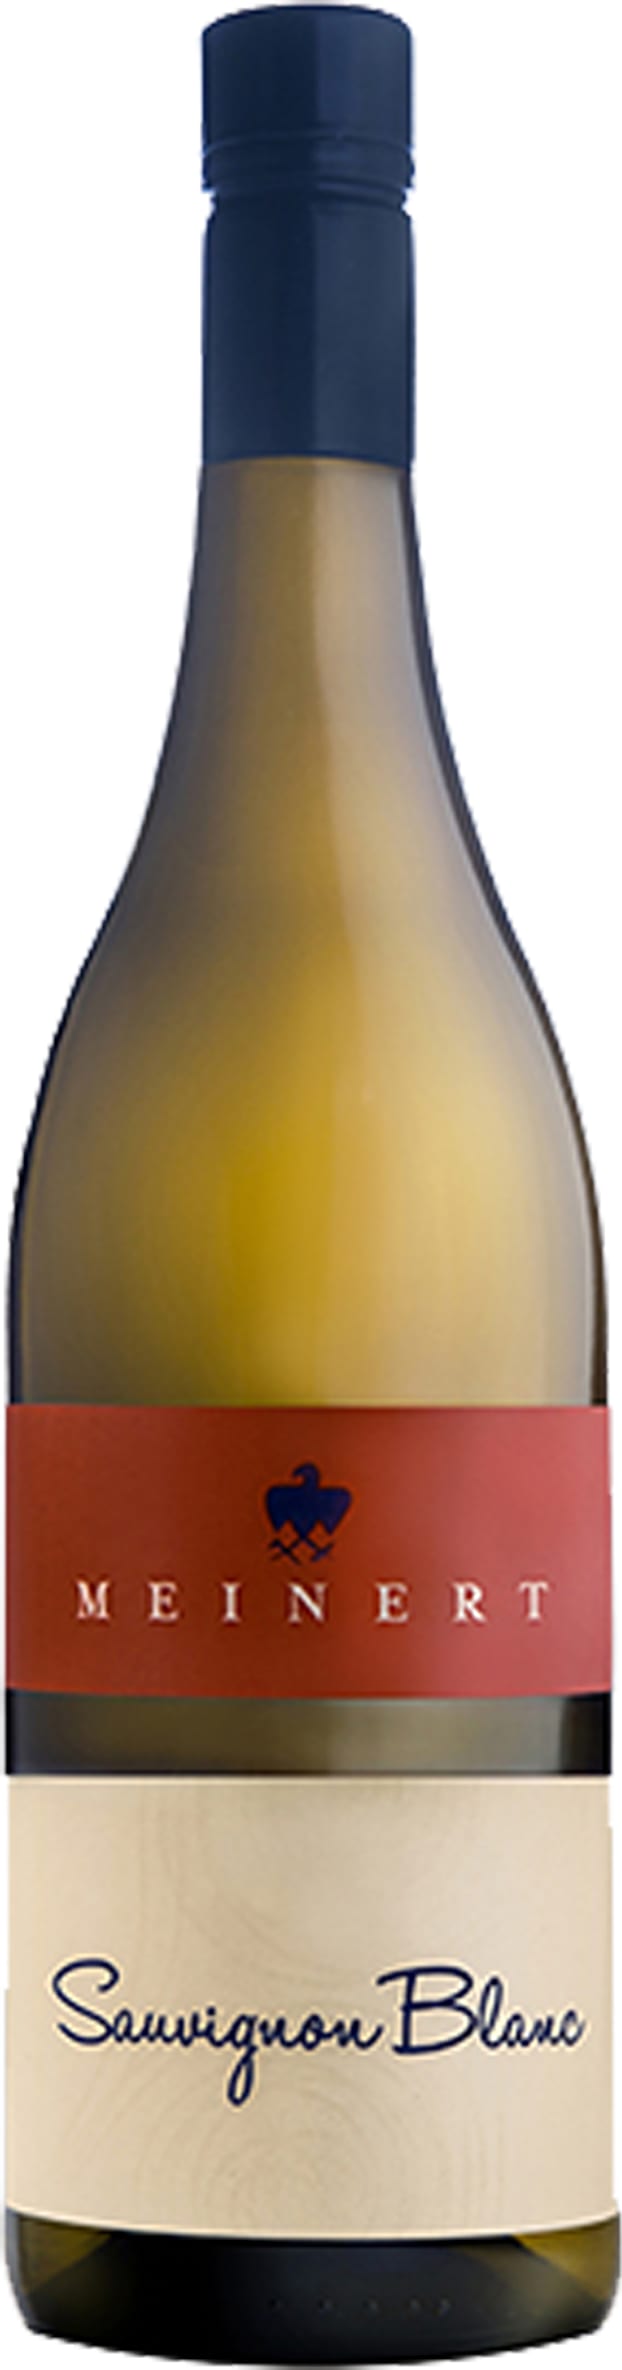 Meinert Sauvignon Blanc 2023 75cl - Buy Meinert Wines from GREAT WINES DIRECT wine shop